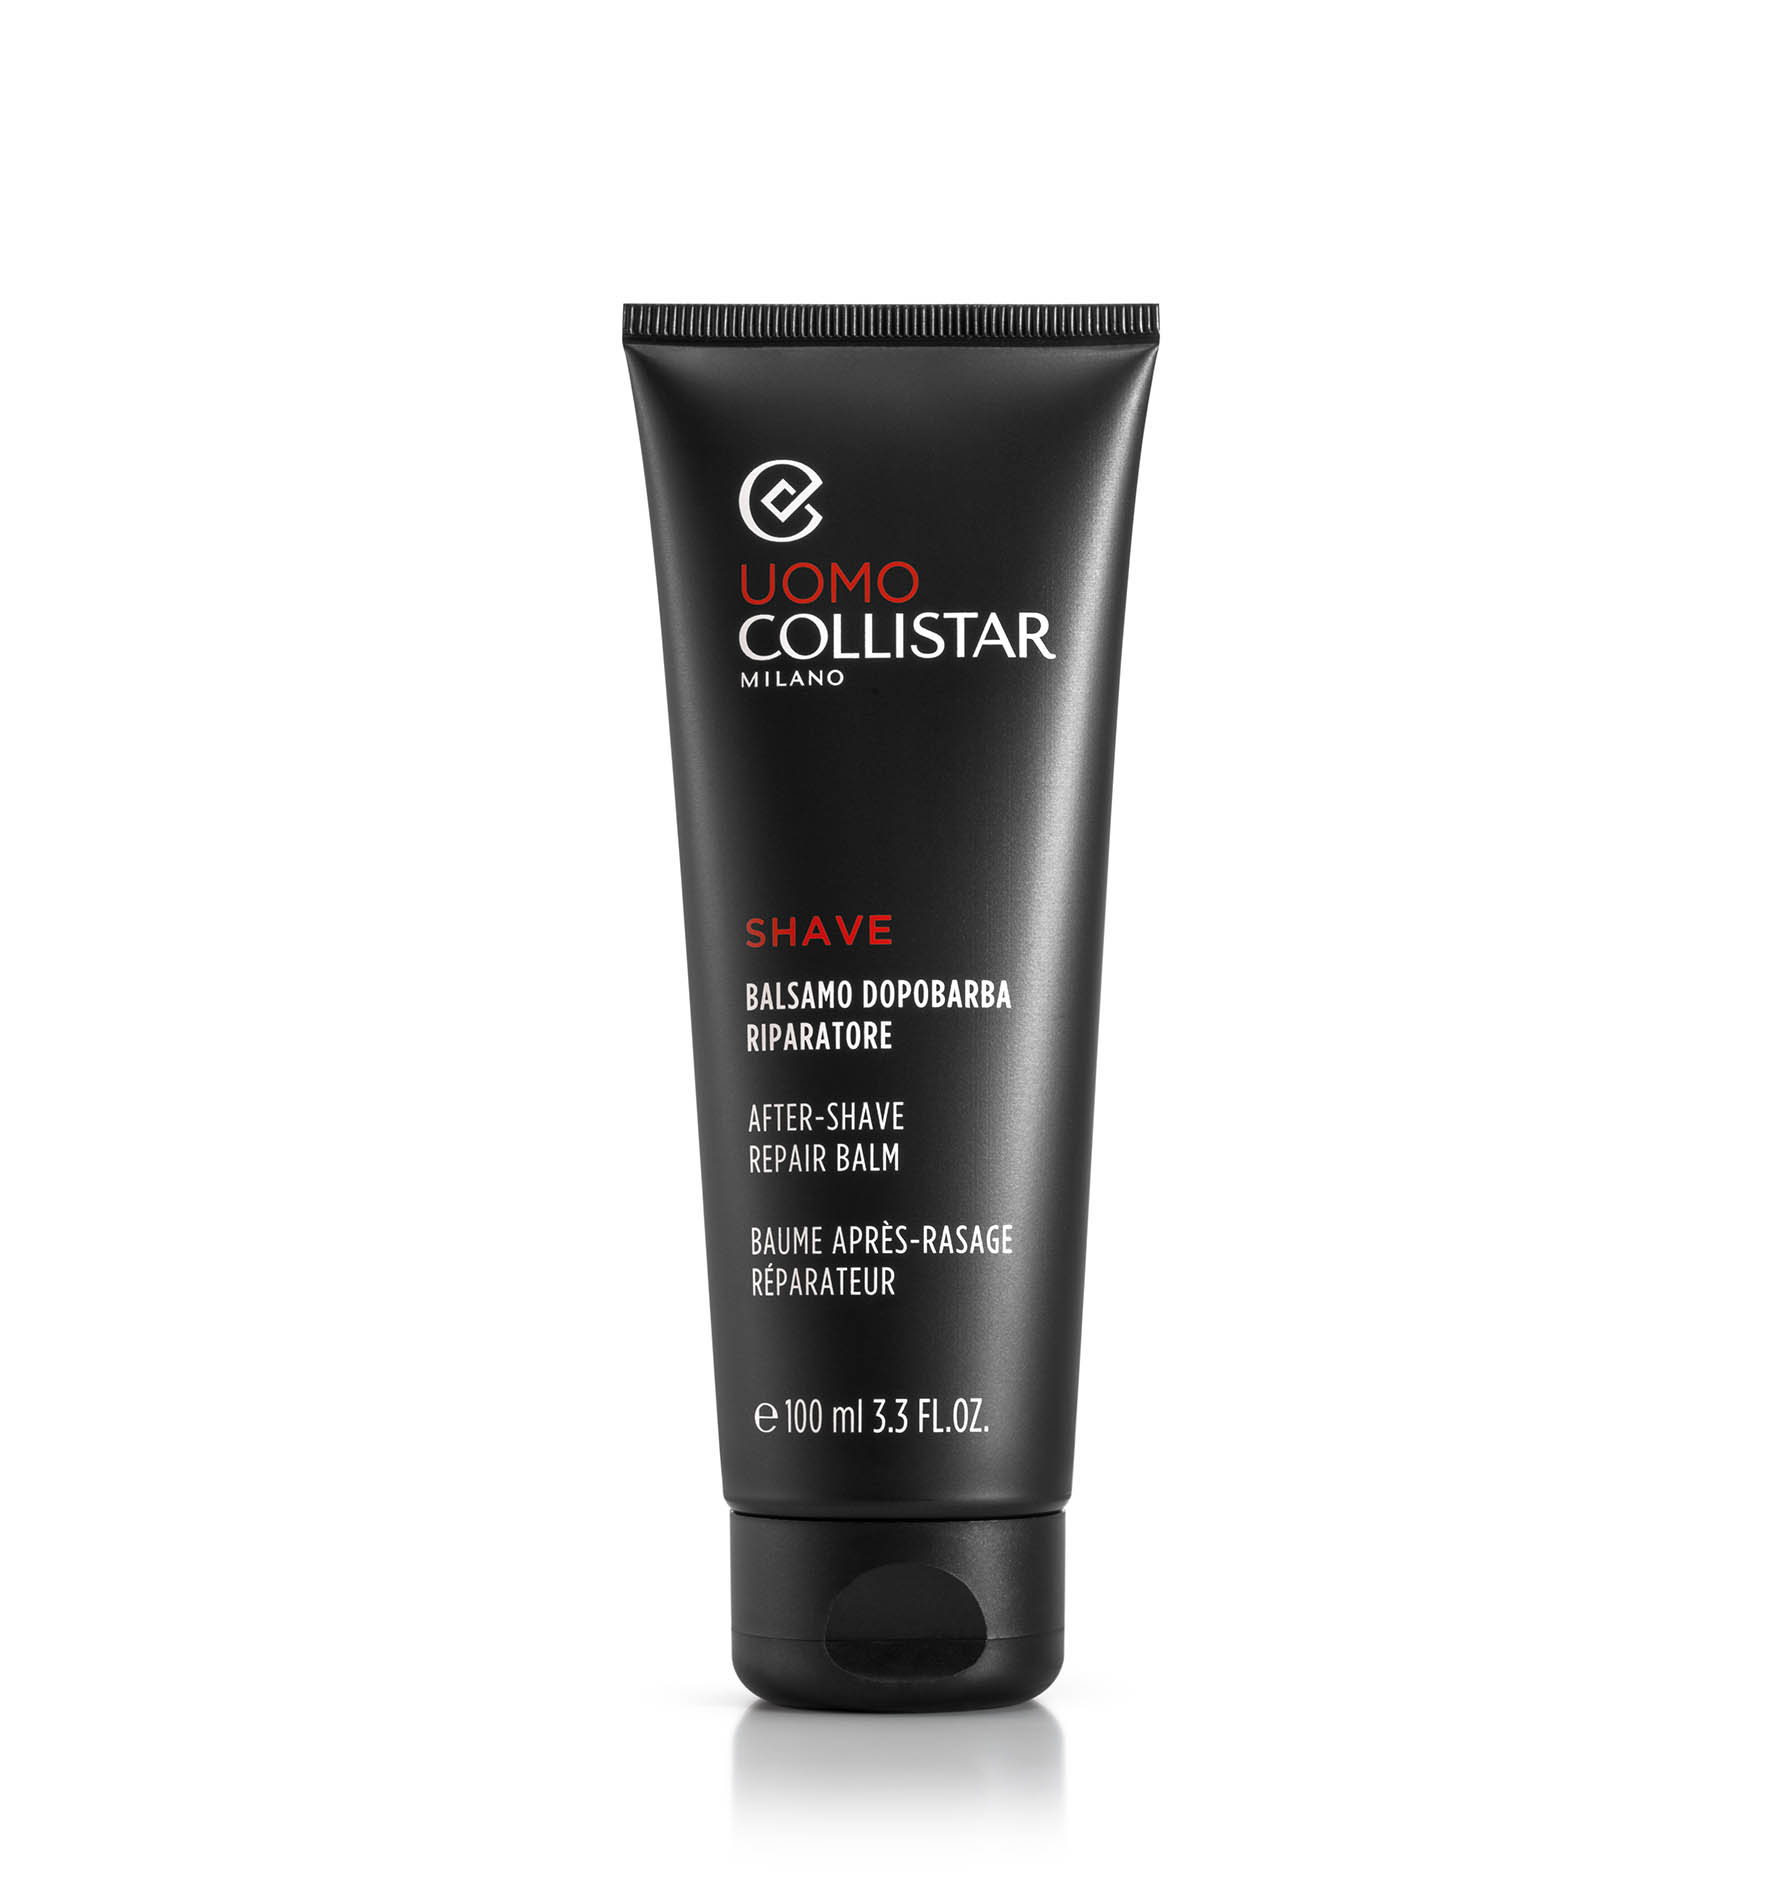 ODBUDOWUJACY BALSAM PO GOLENIU - Produkty do golenia i po goleniu | Collistar - Shop Online Ufficiale